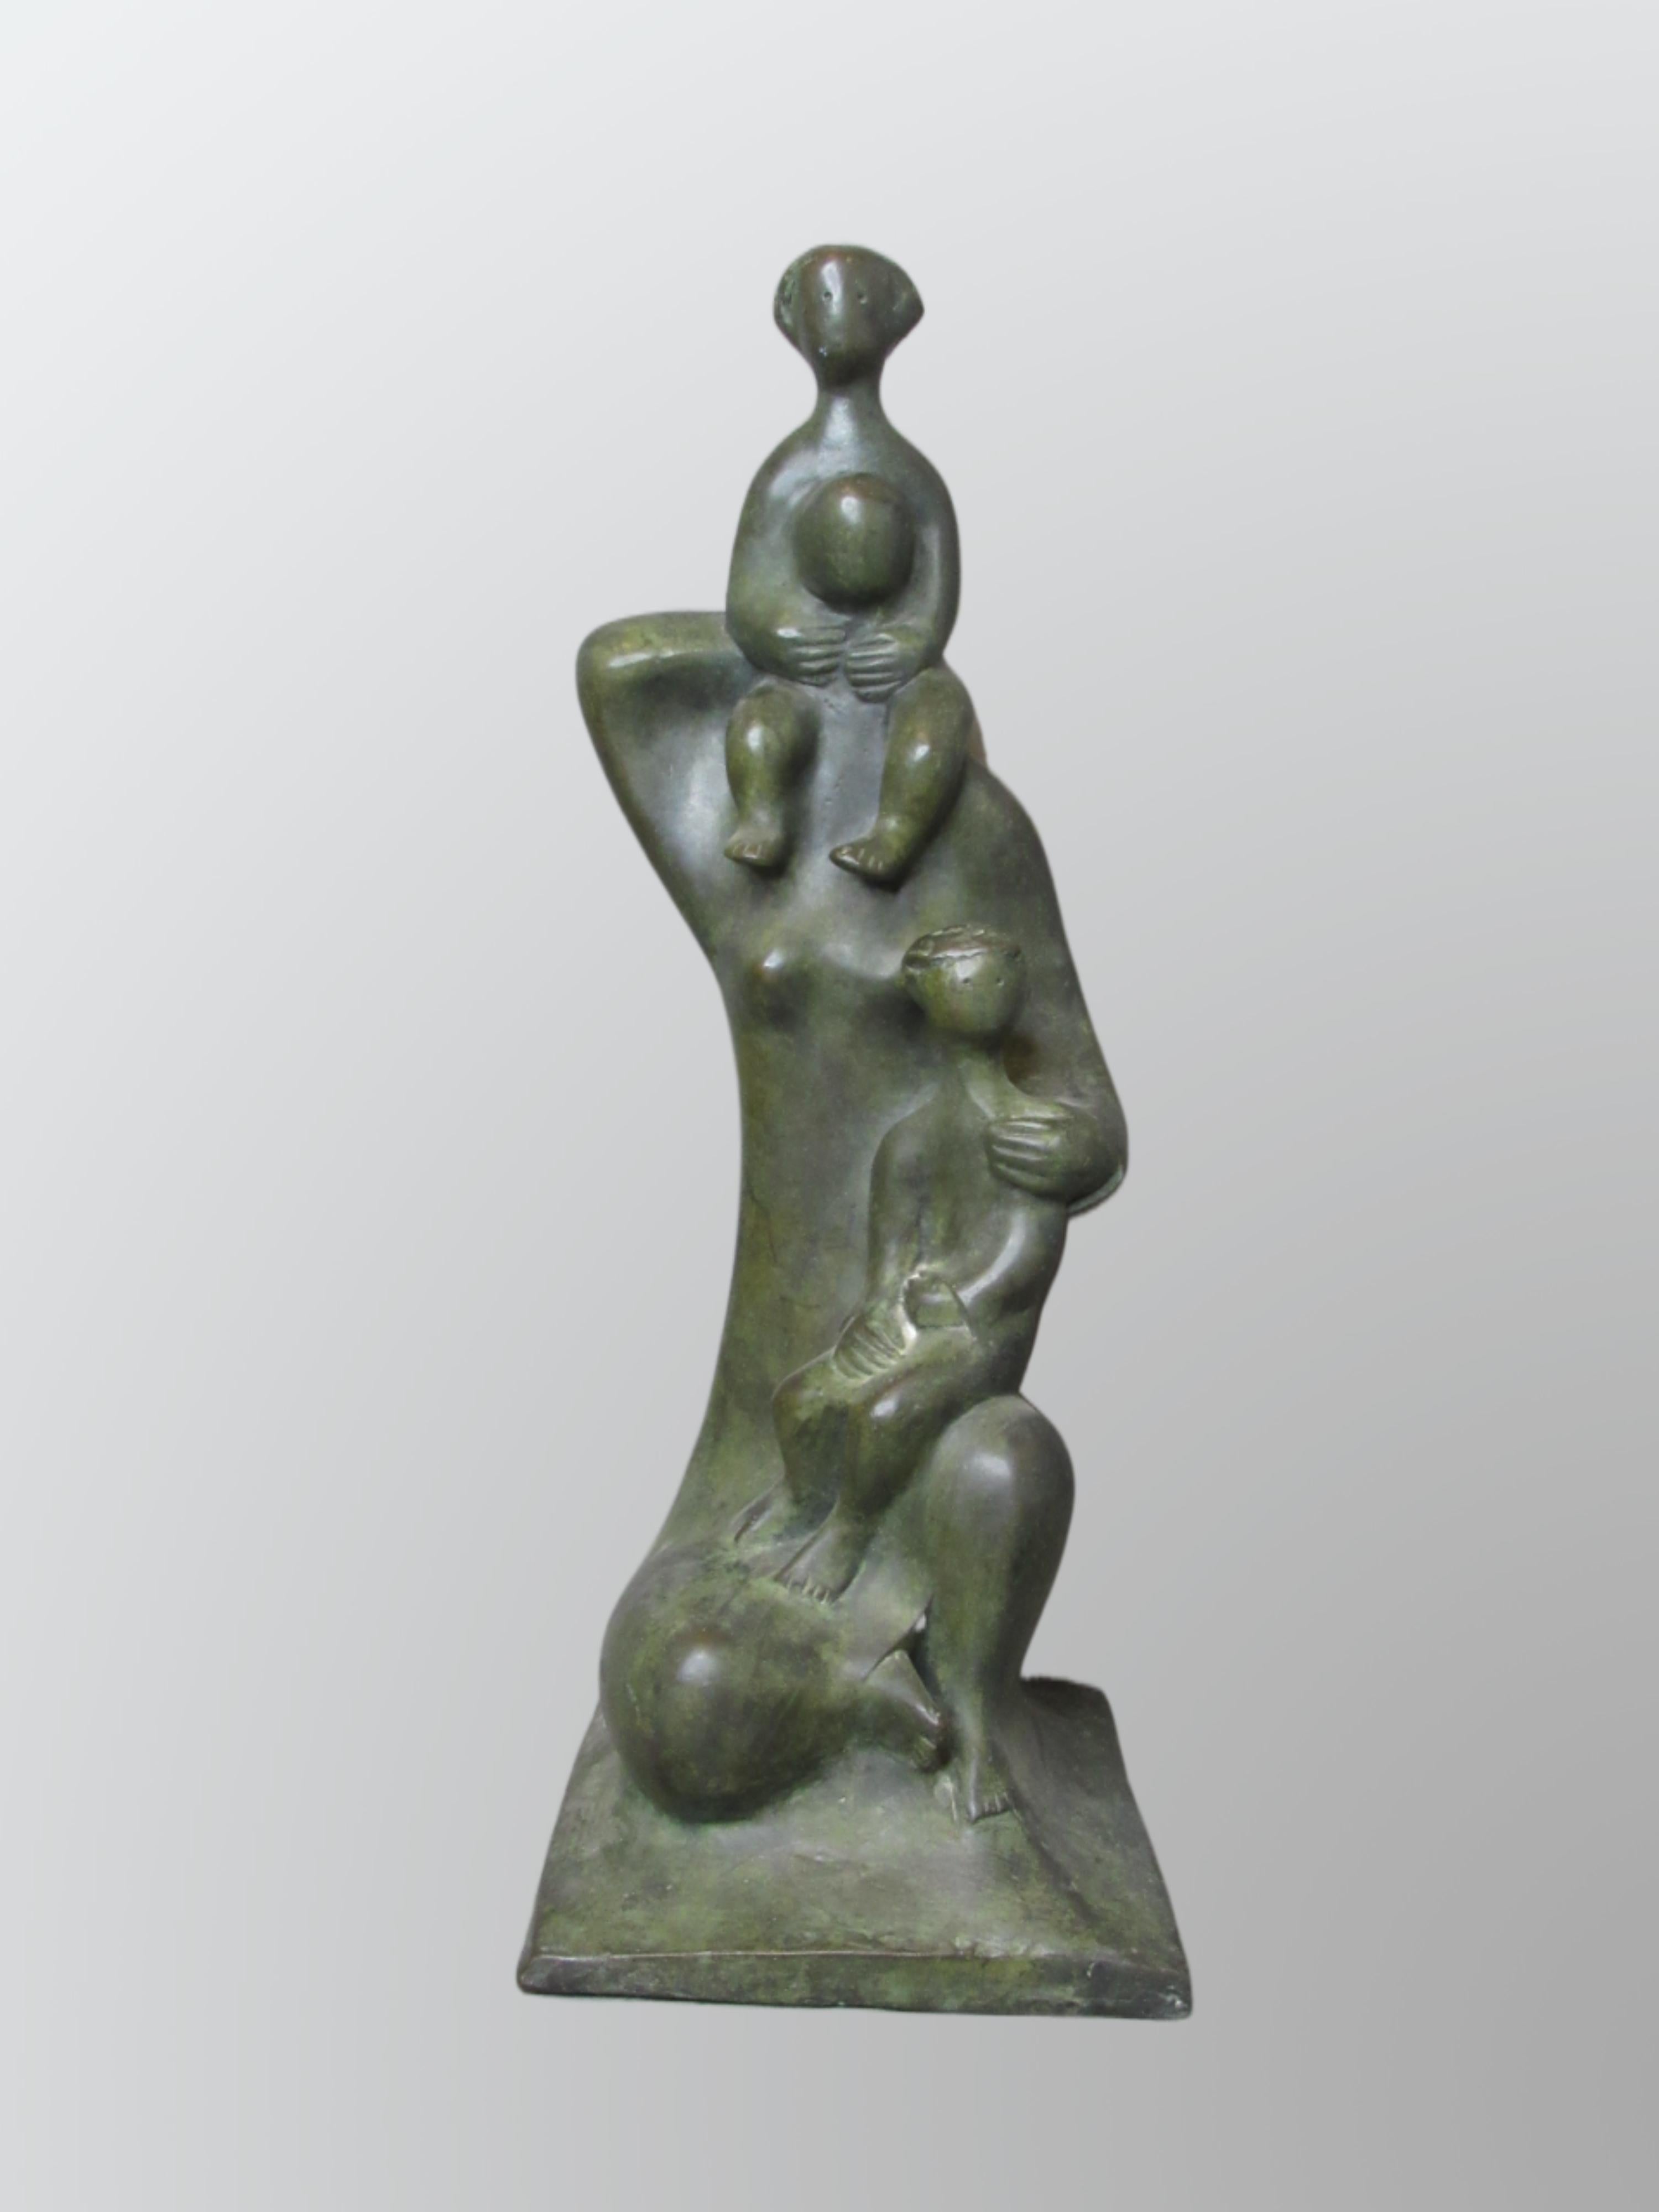 Daniel Kafri, "Family", 1989, sculpture en bronze, 27x17x19 cm